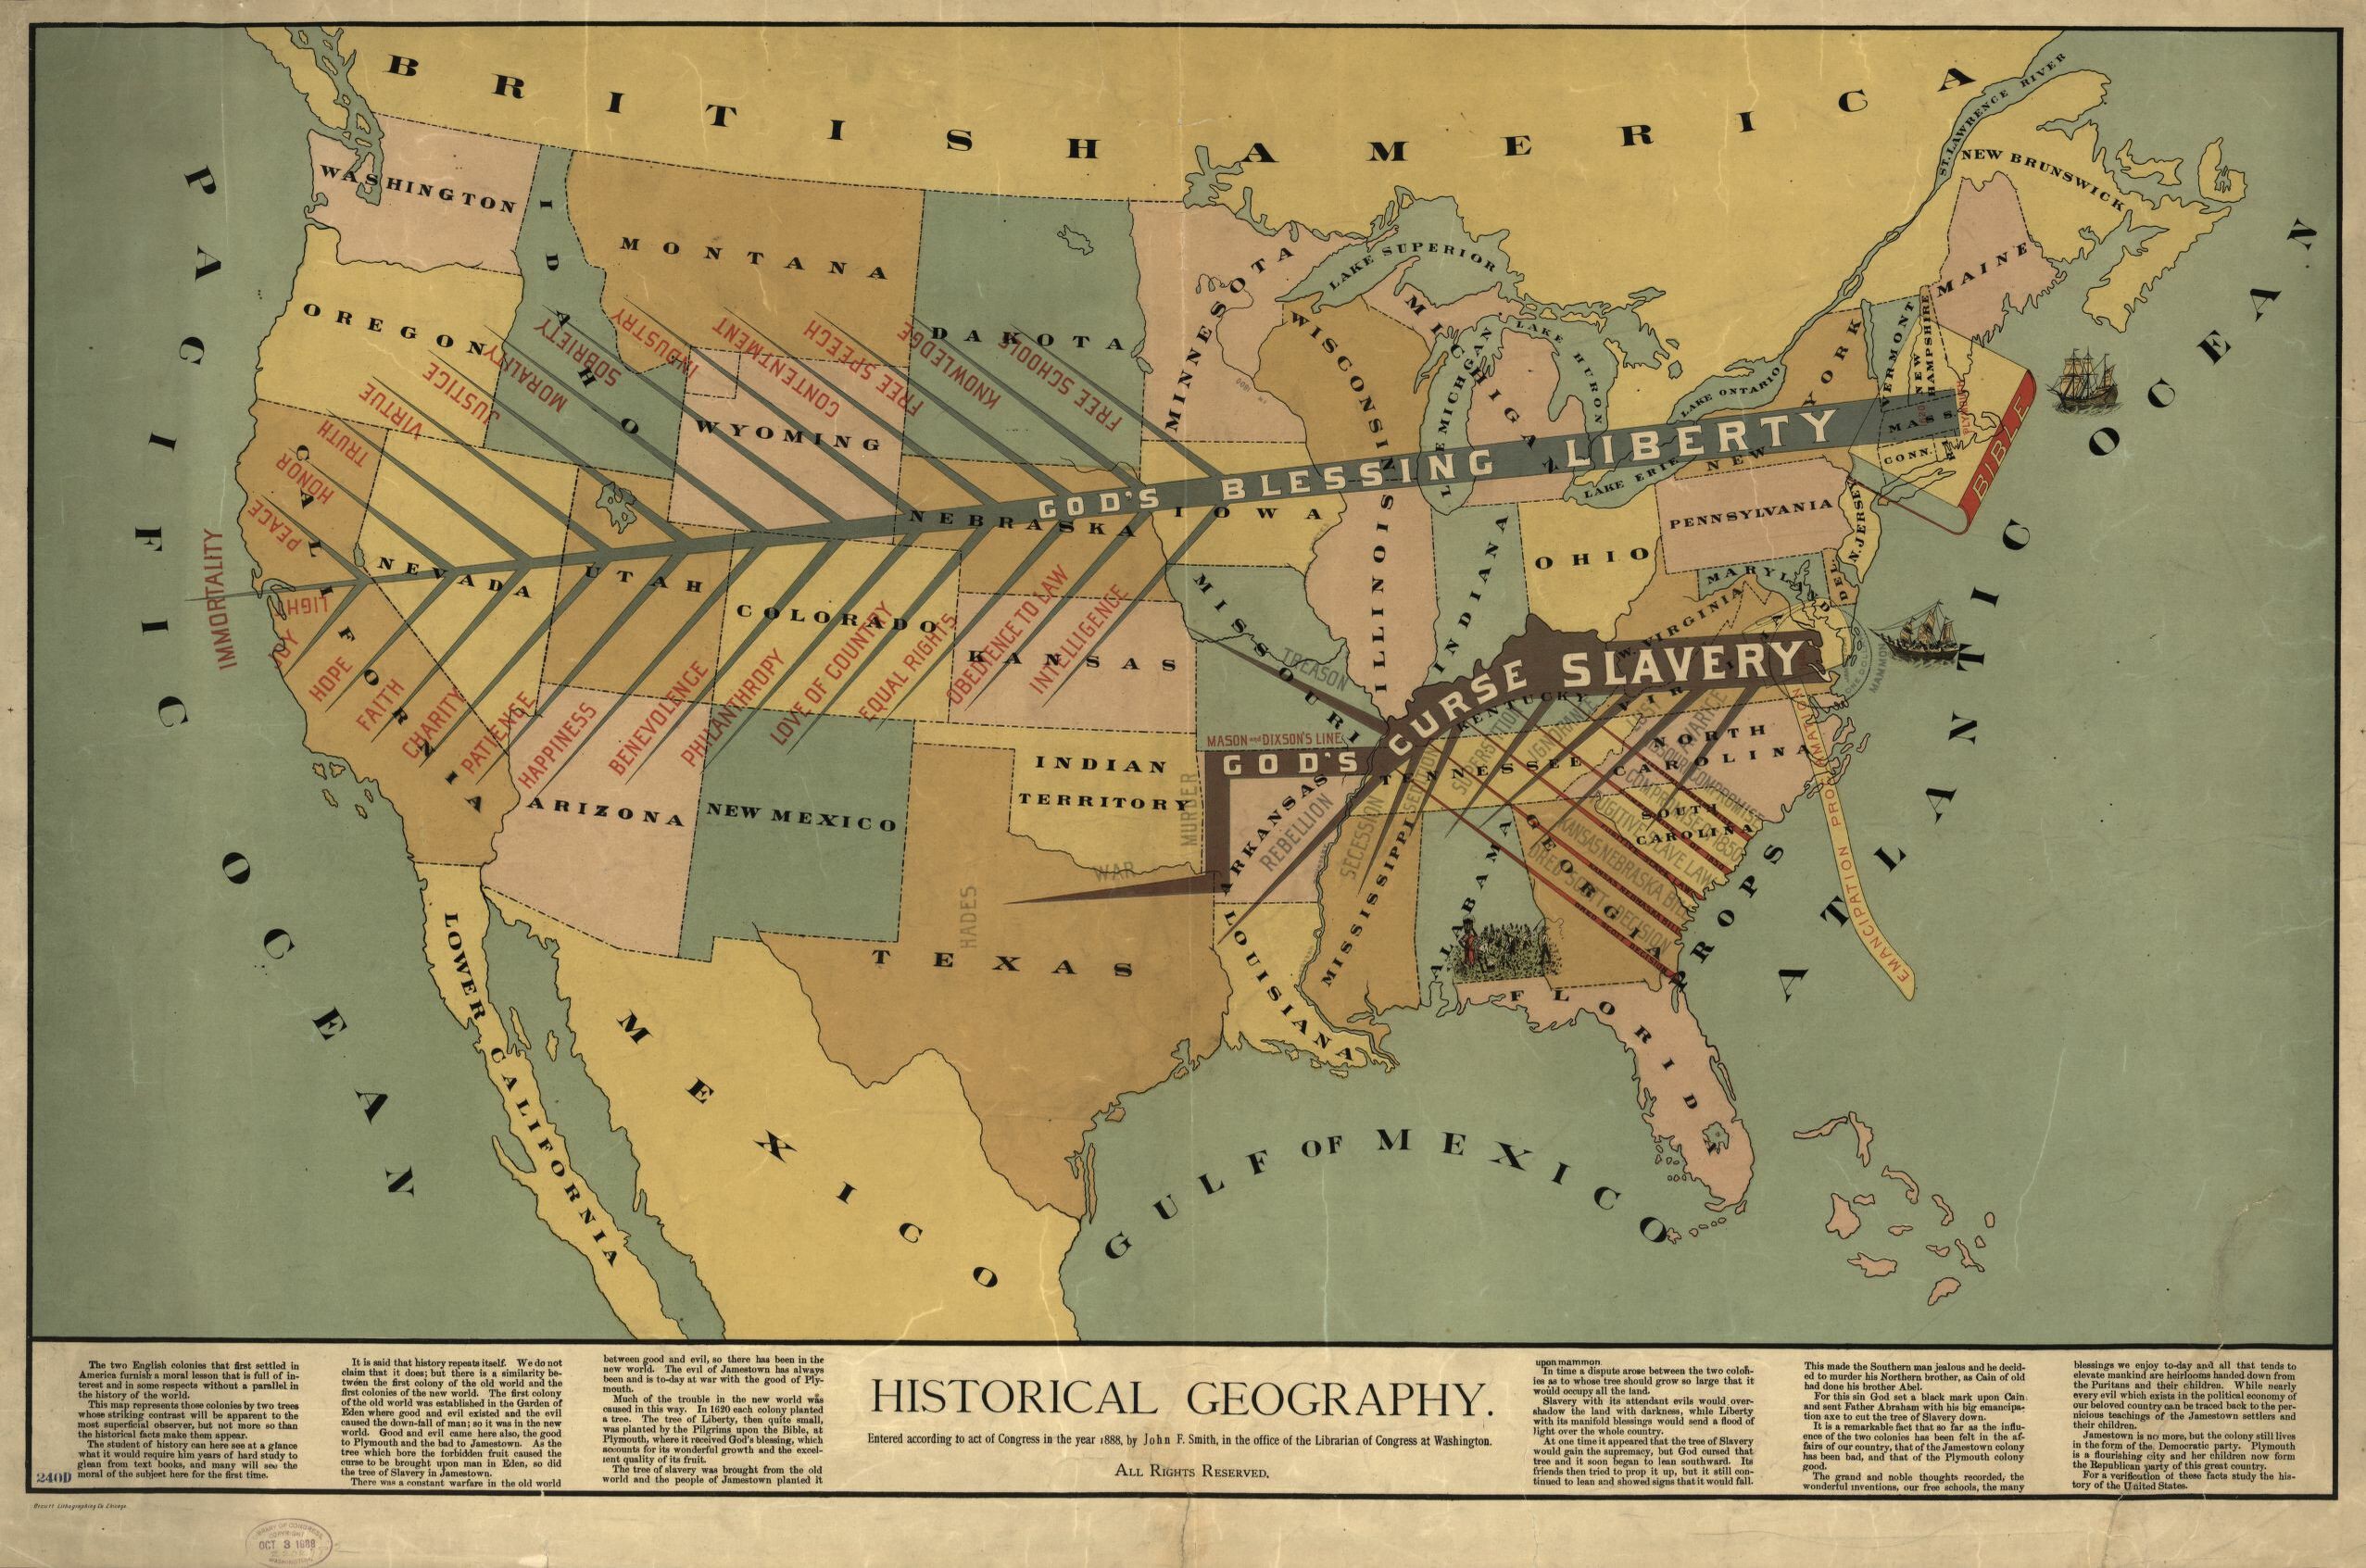 John F. Smith, Historical Geography, 1888